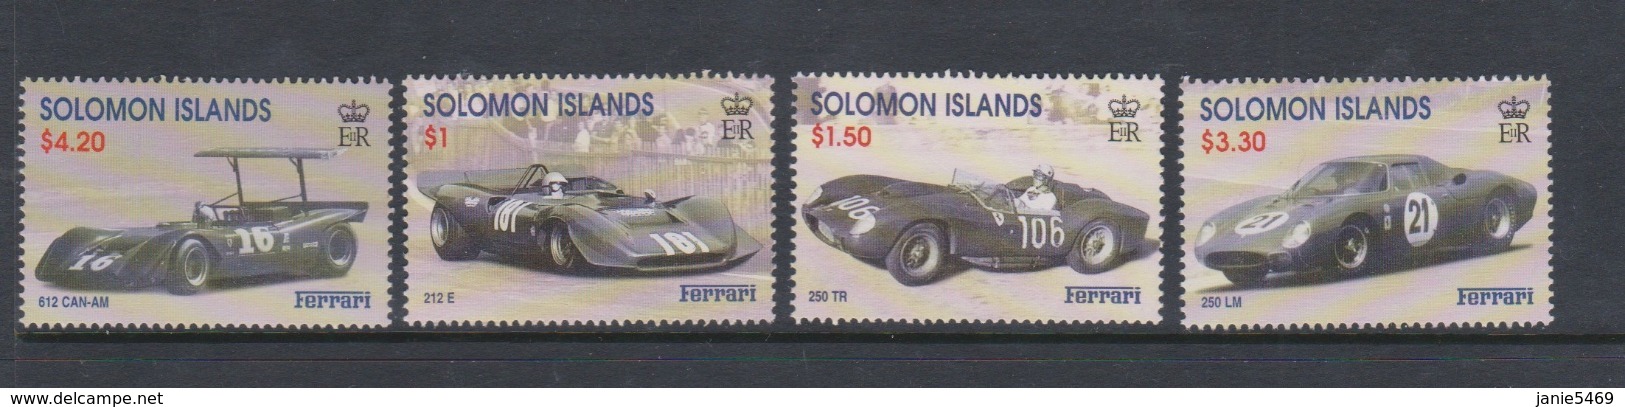 Solomon Islands SG 947-950 1999 Ferrari Racing Cars,mint Never Hinged - Solomon Islands (1978-...)